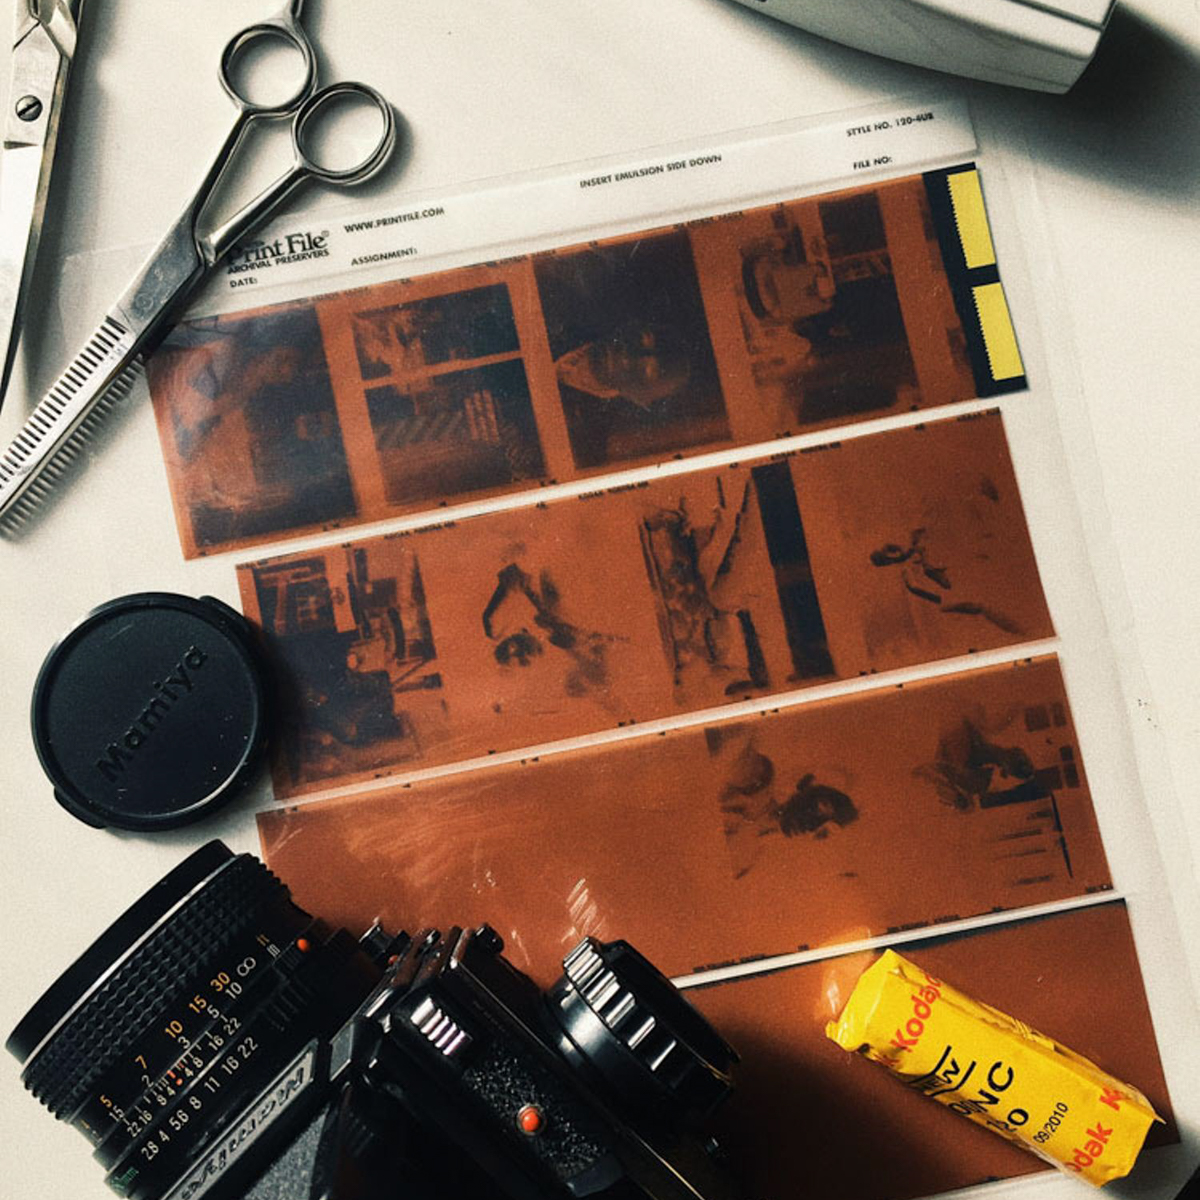 After 56 years: The last days of Riviera Salon on Kodak Portra 400